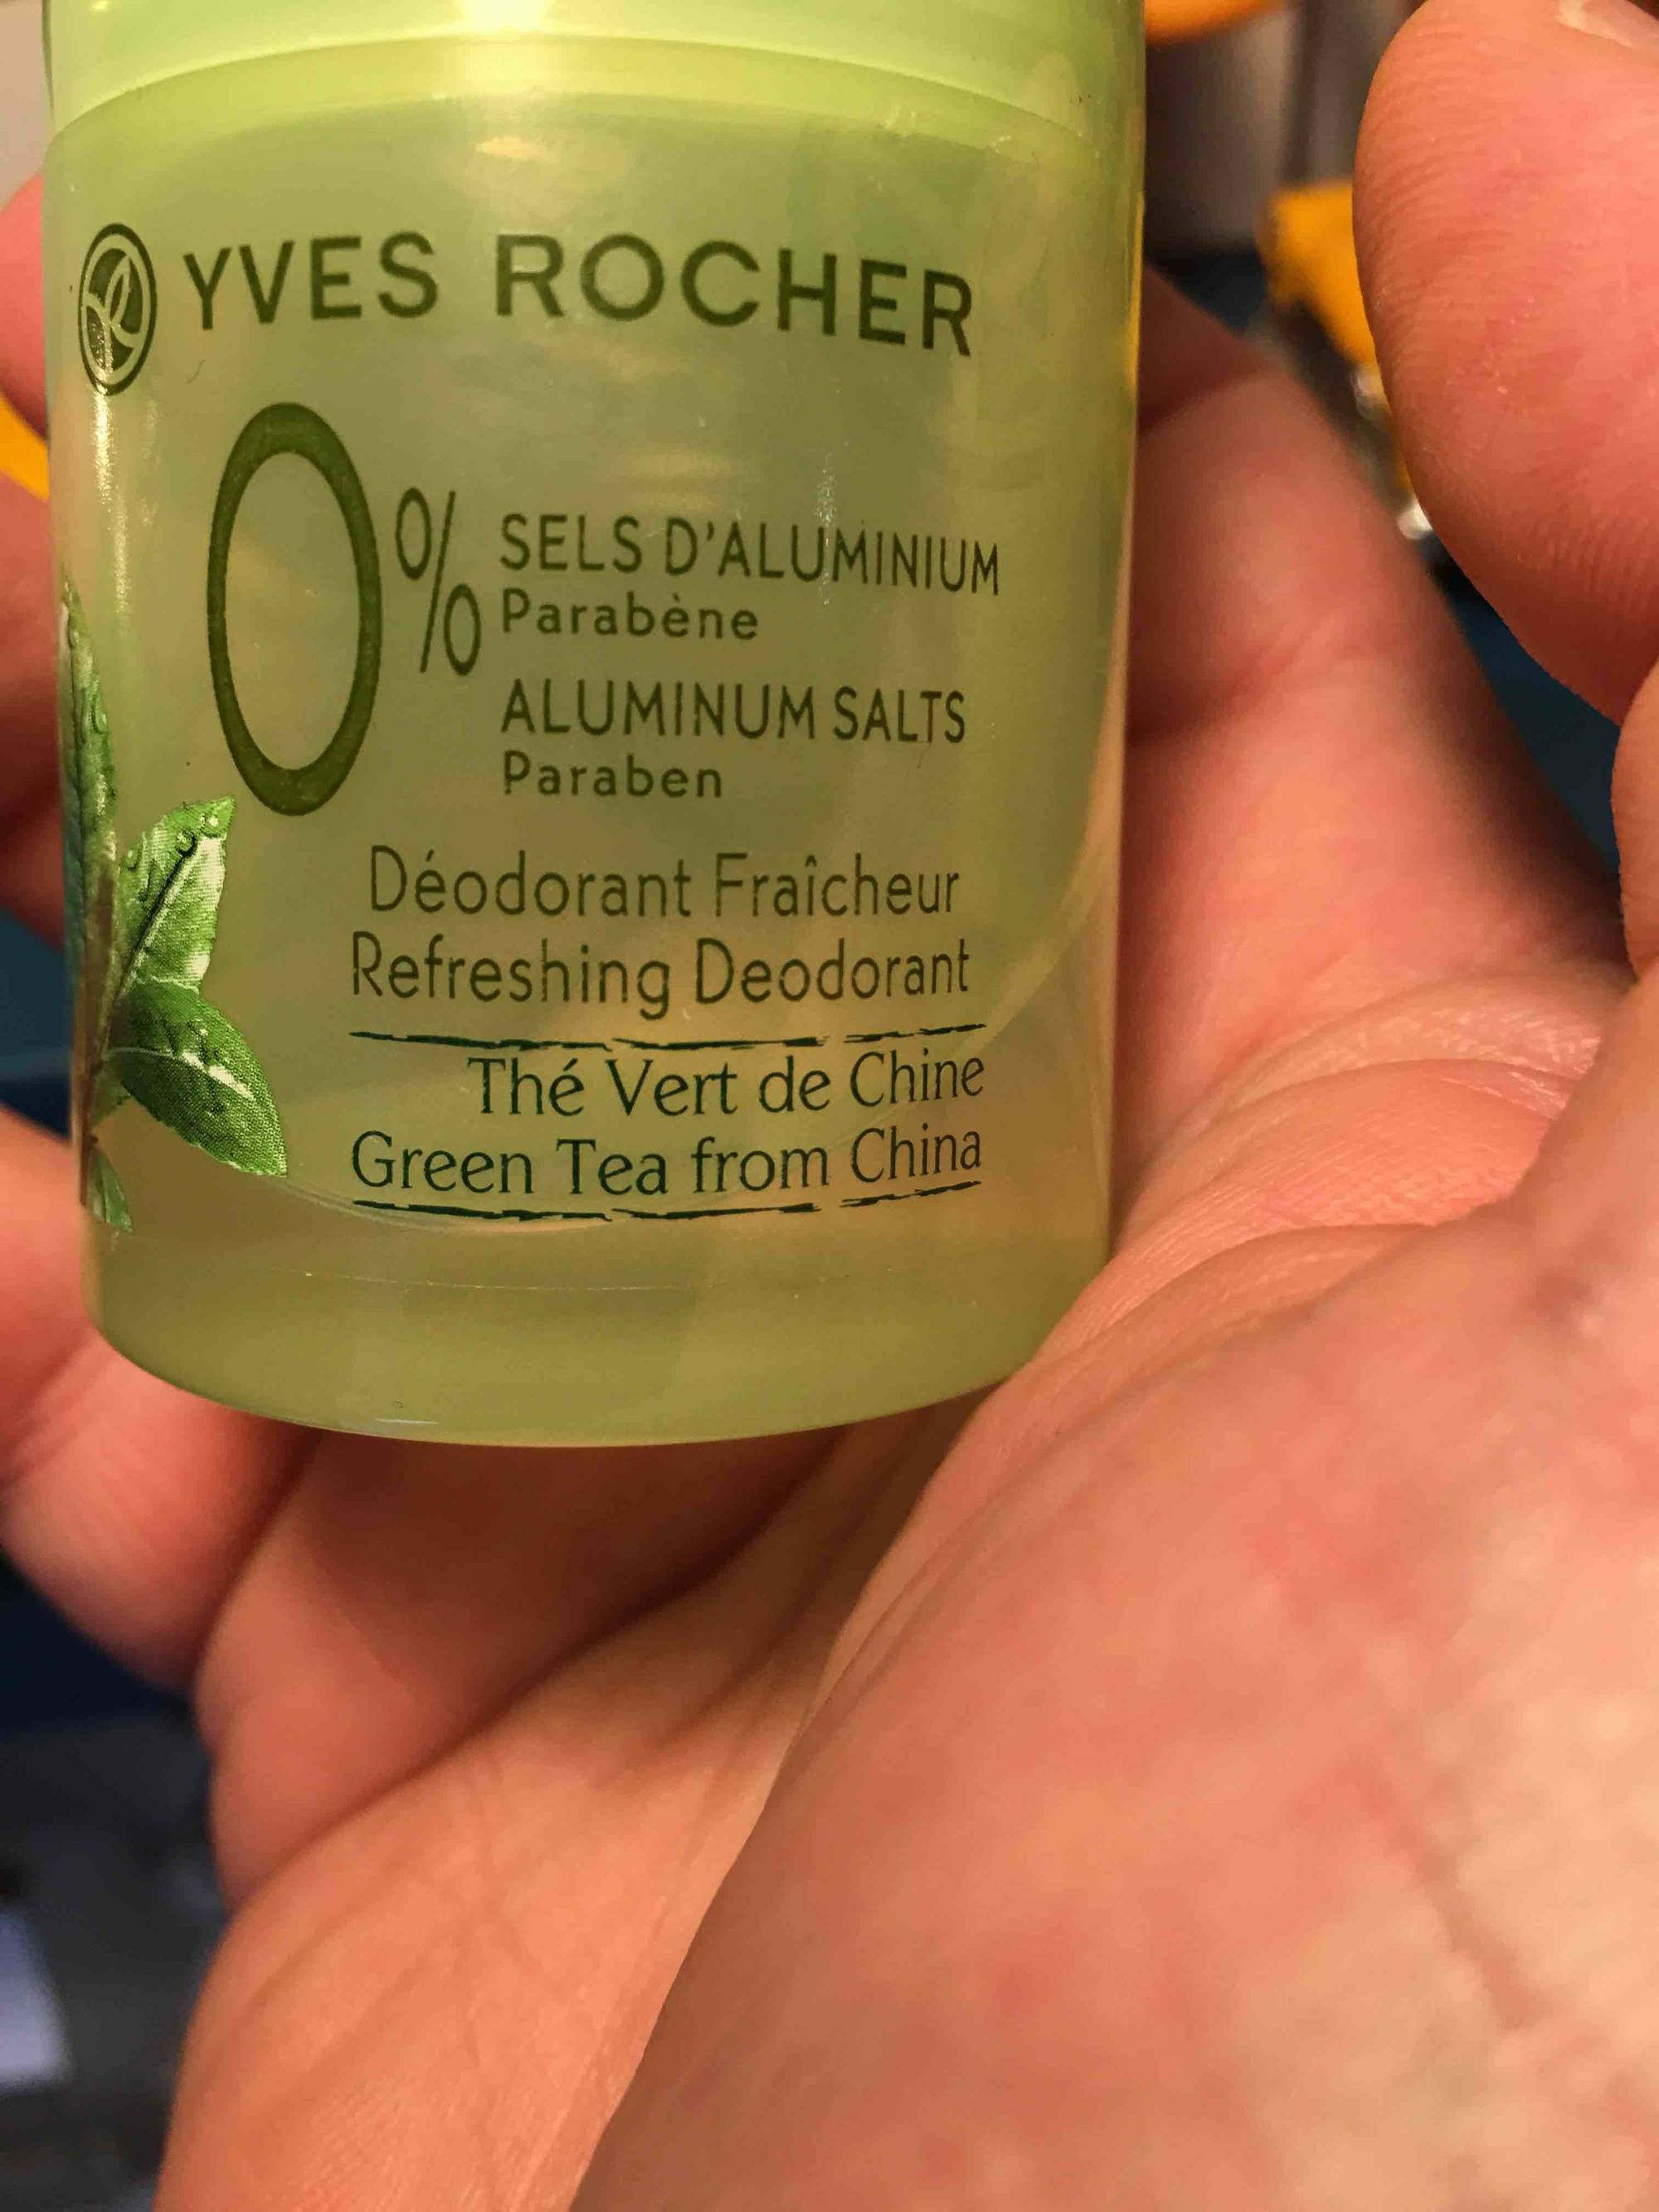 YVES ROCHER - 0% sels d'aluminium - Déodorant fraîcheur thé vert de chine